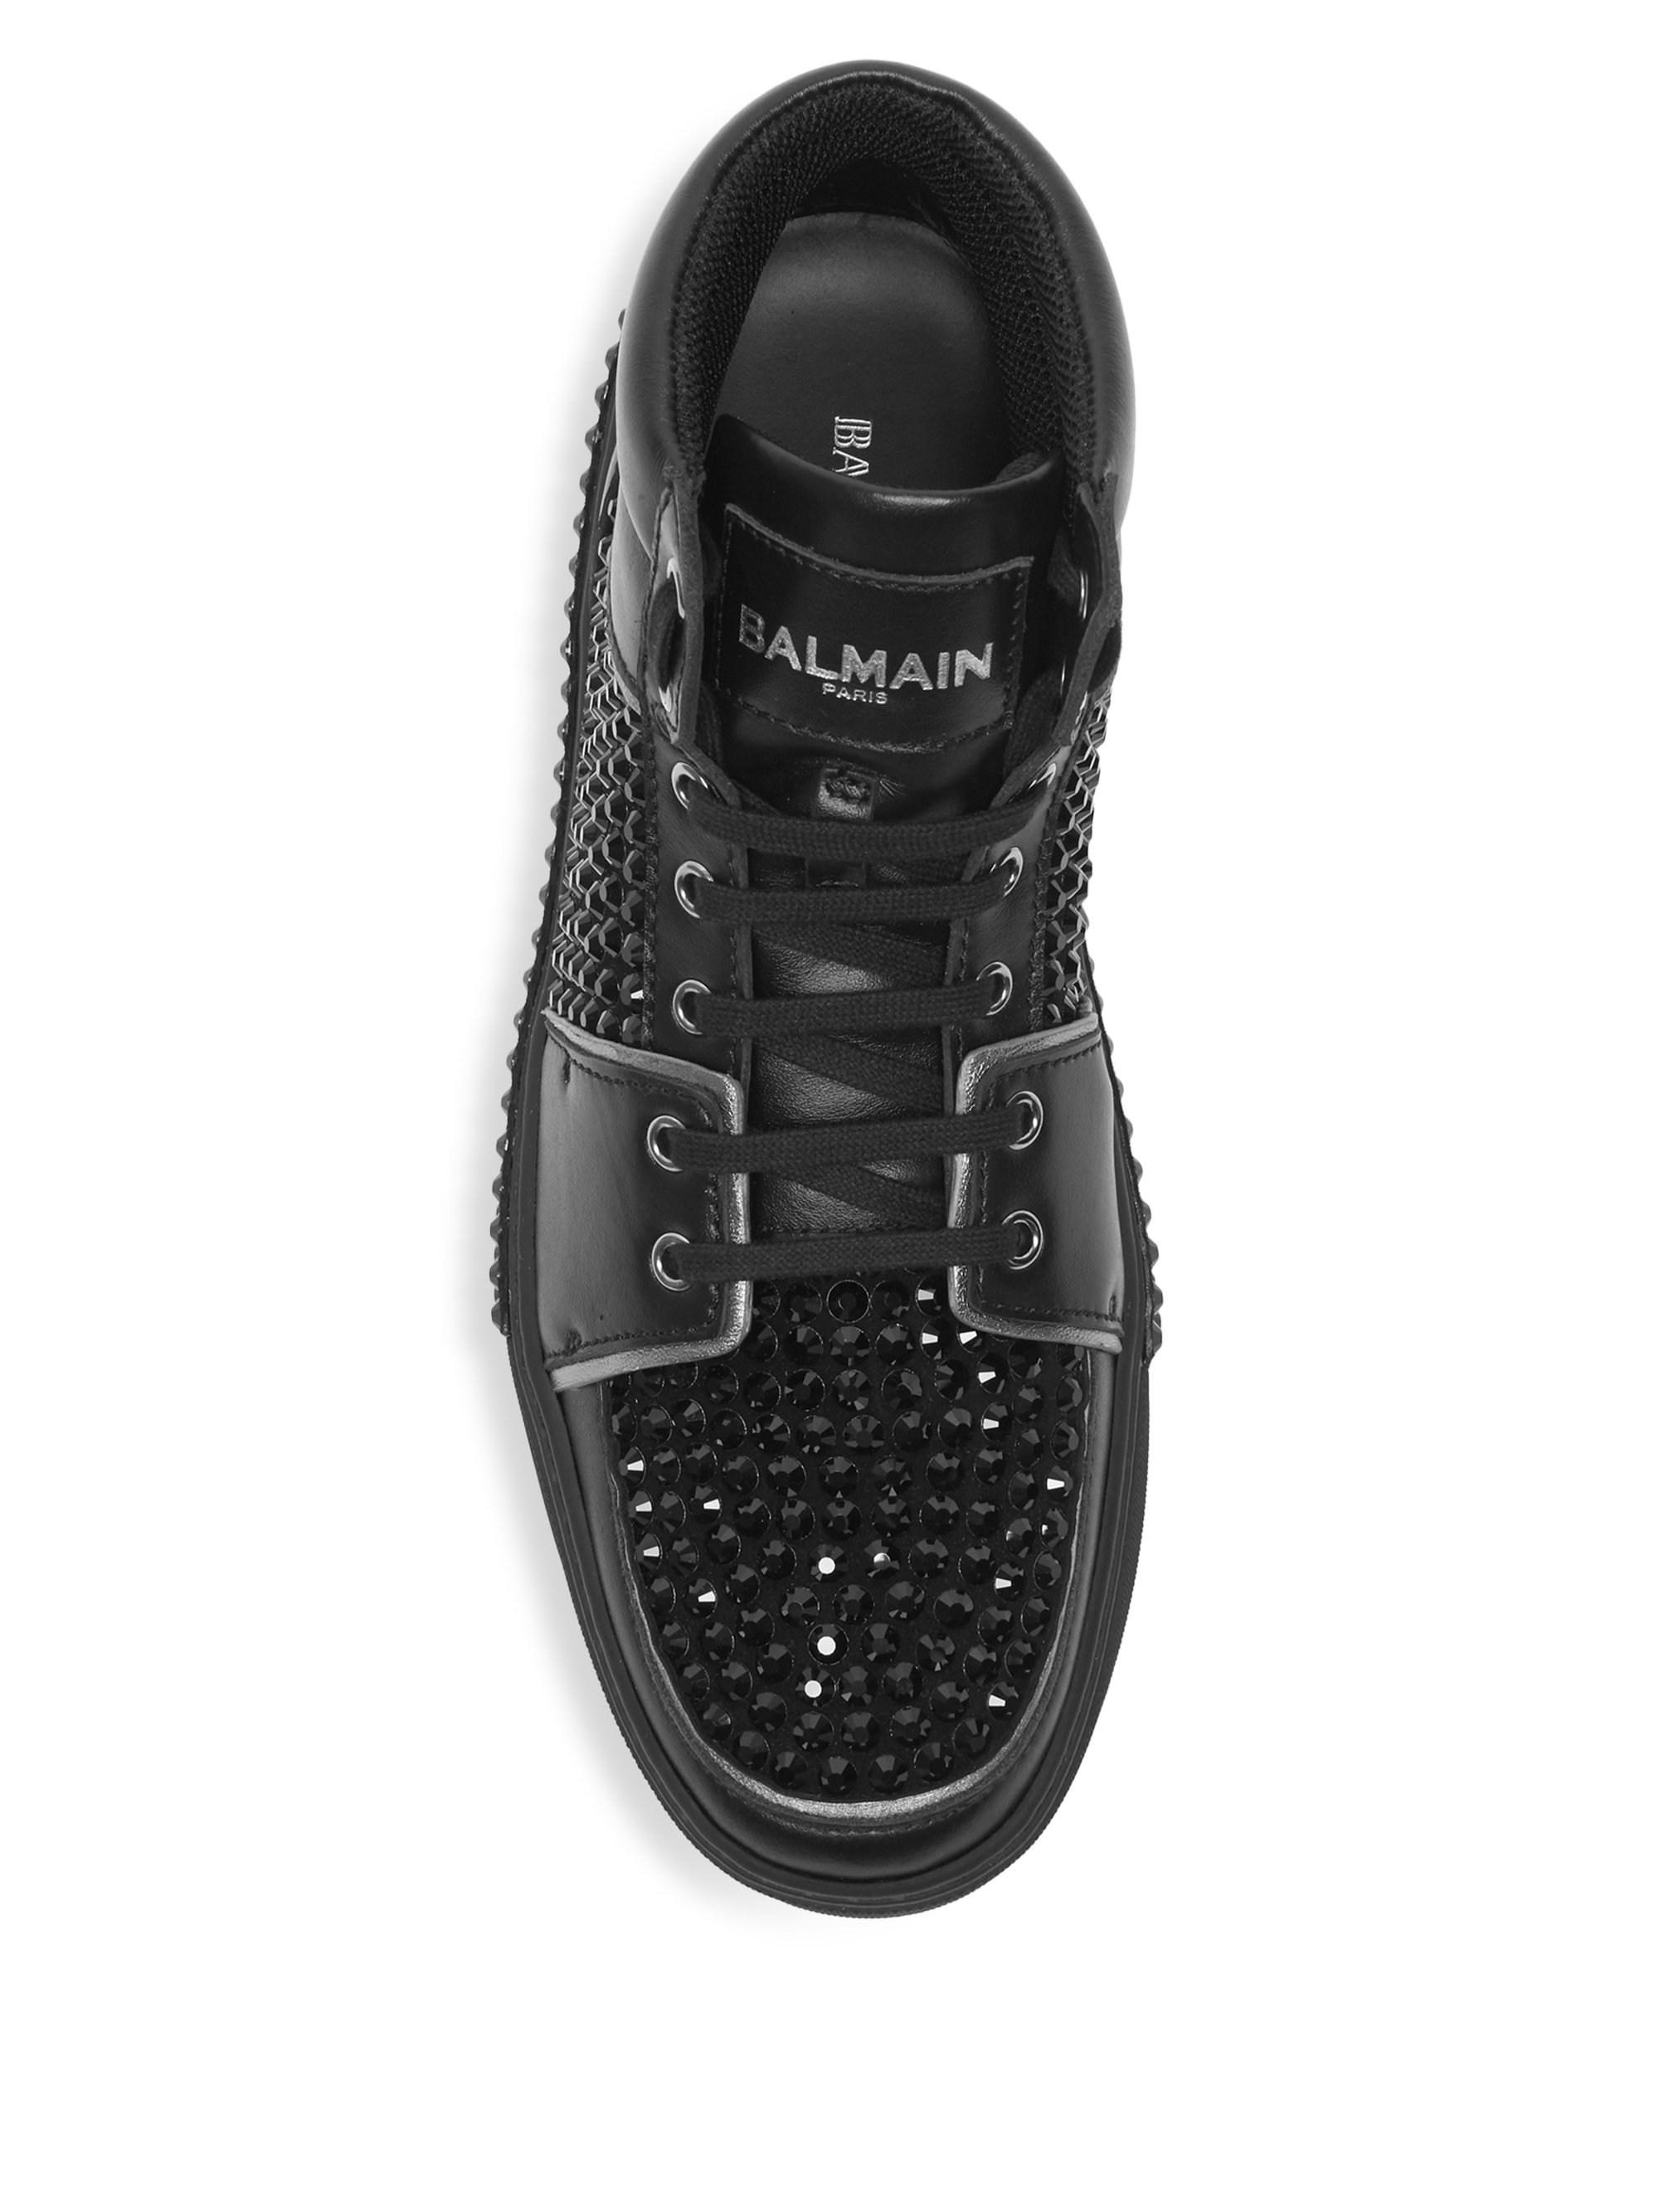 Balmain Studded High-top Sneakers in Black | Lyst